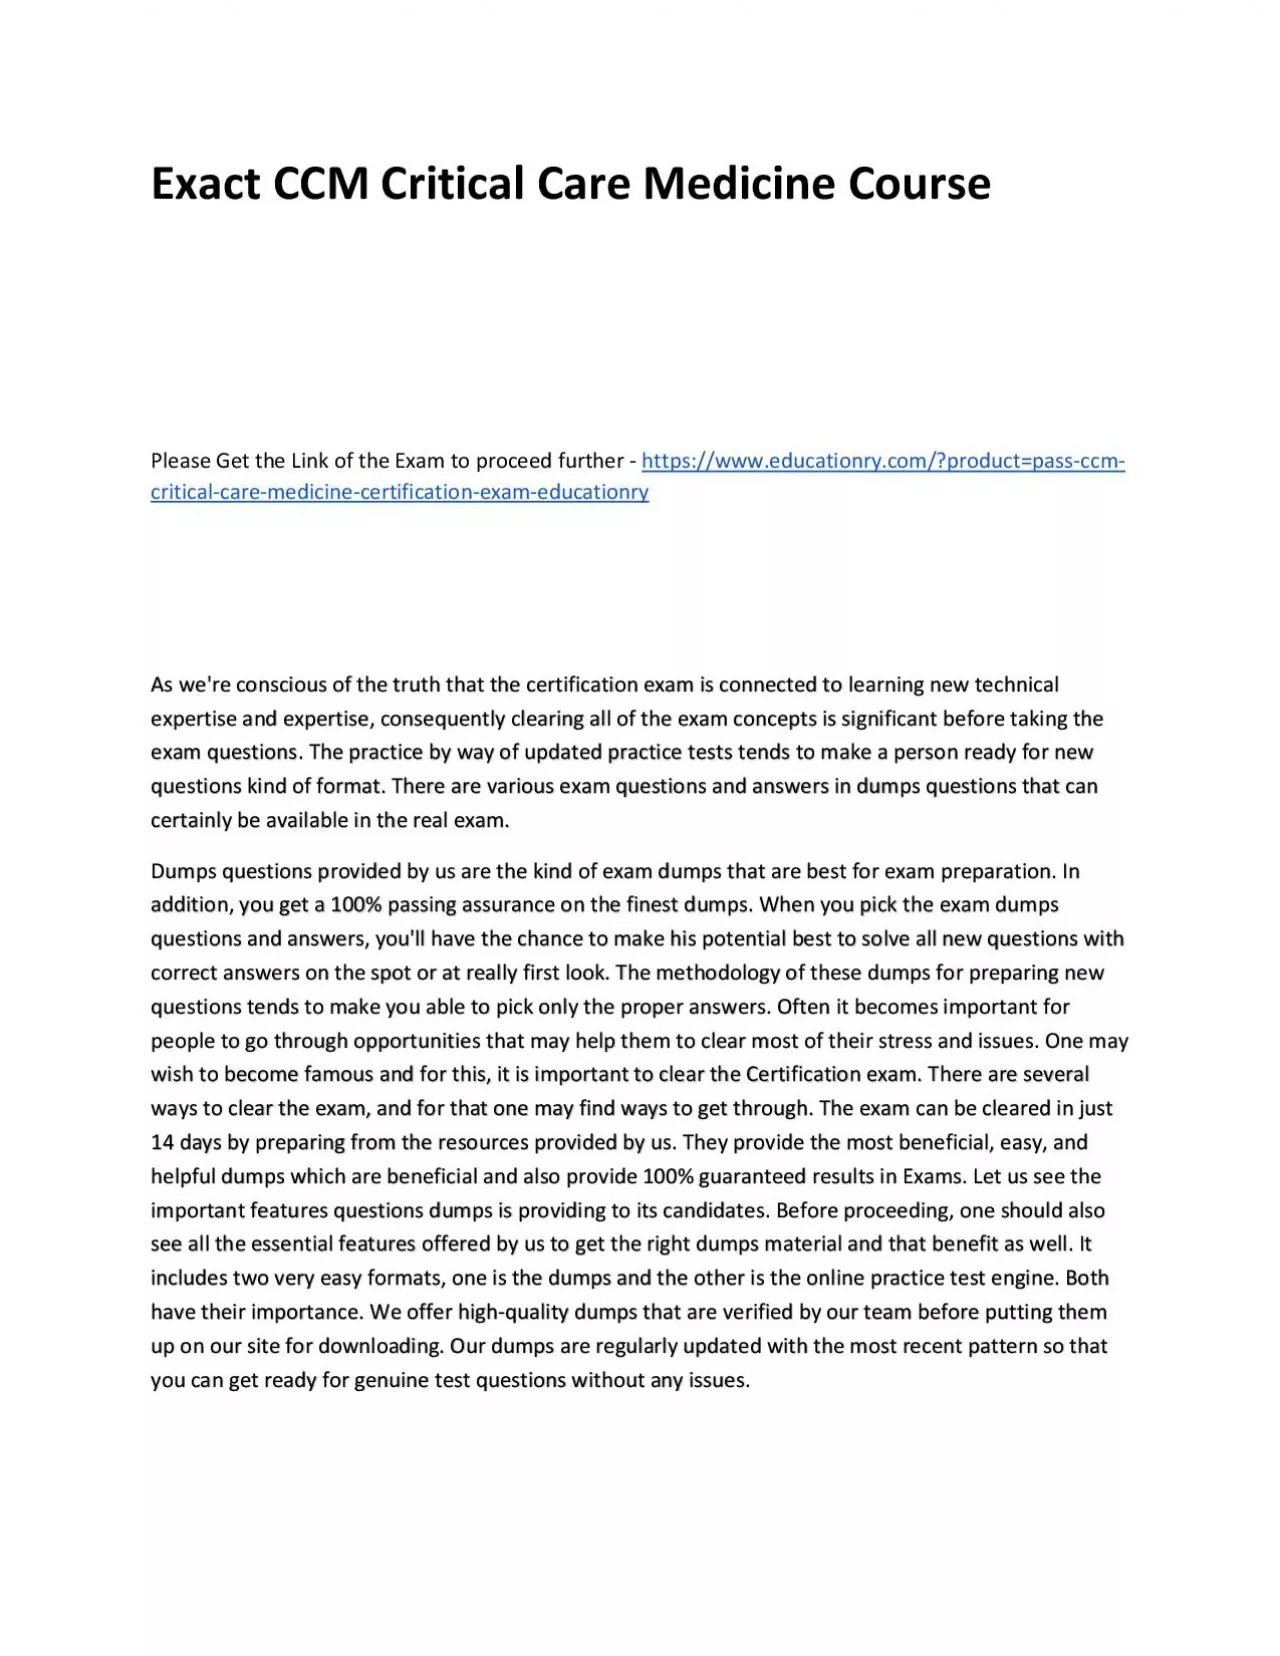 Exact CCM Critical Care Medicine Practice Course